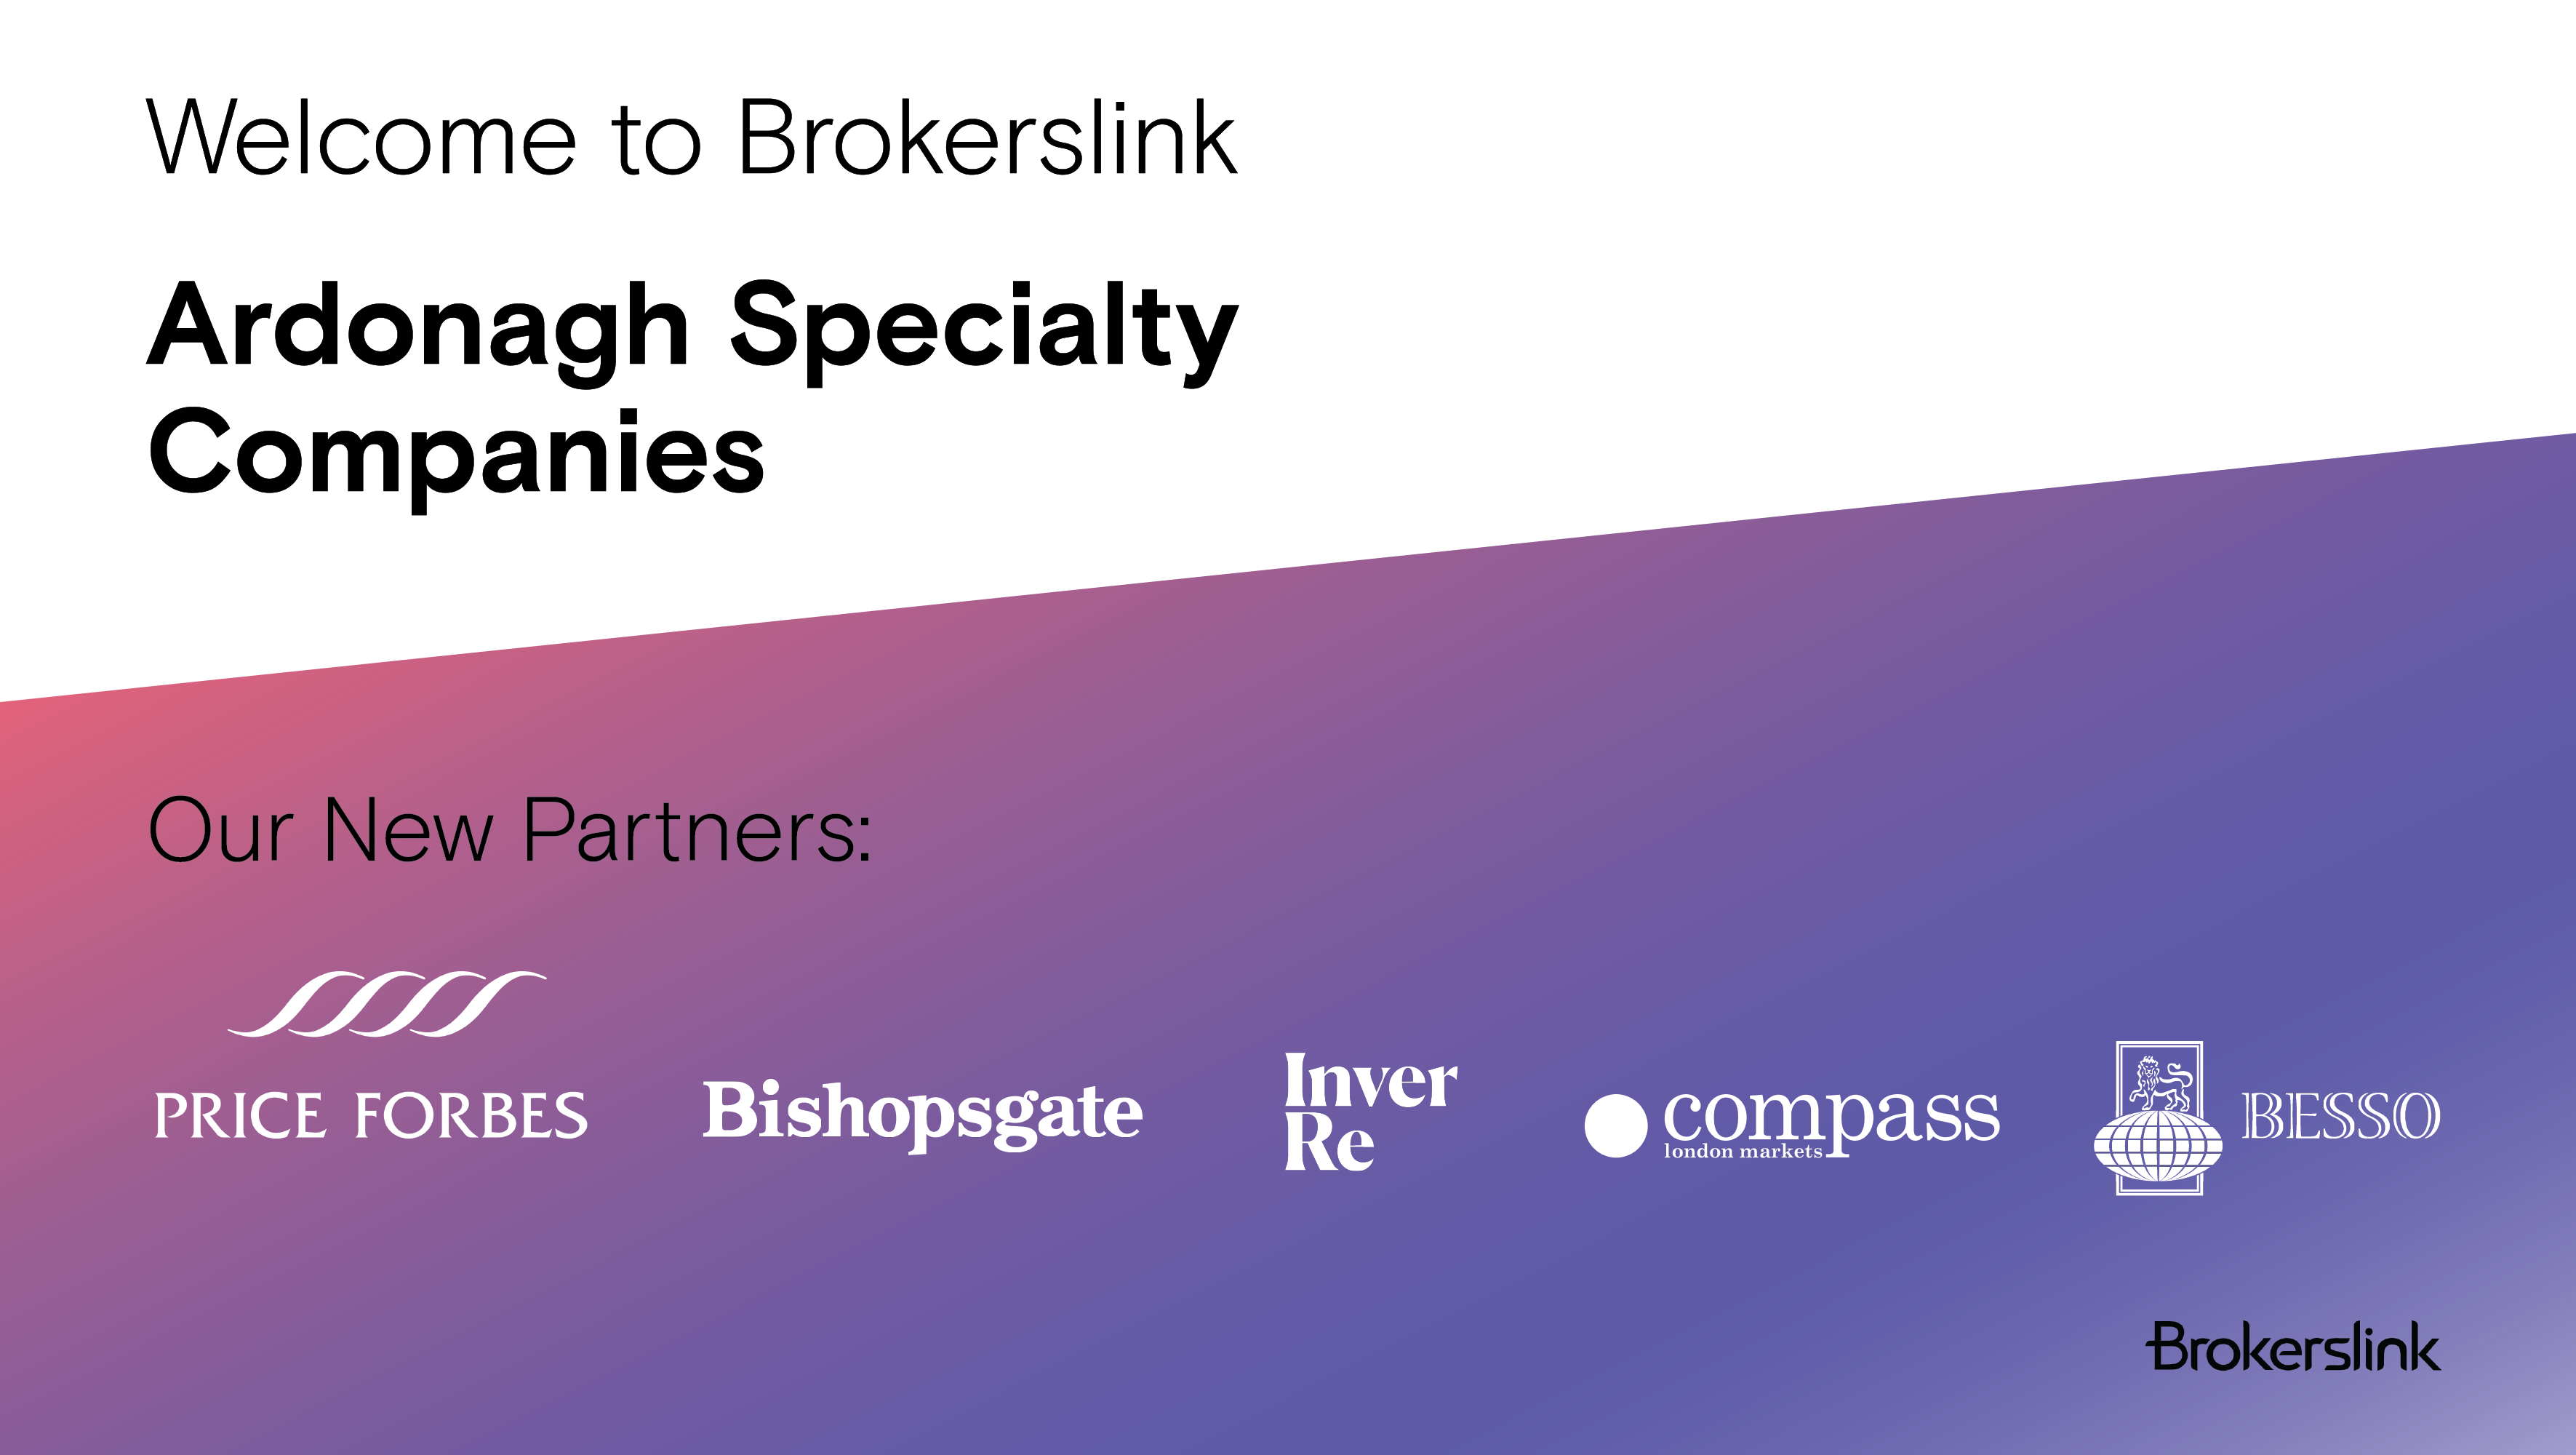 Ardonagh Speciality joins Brokerslink